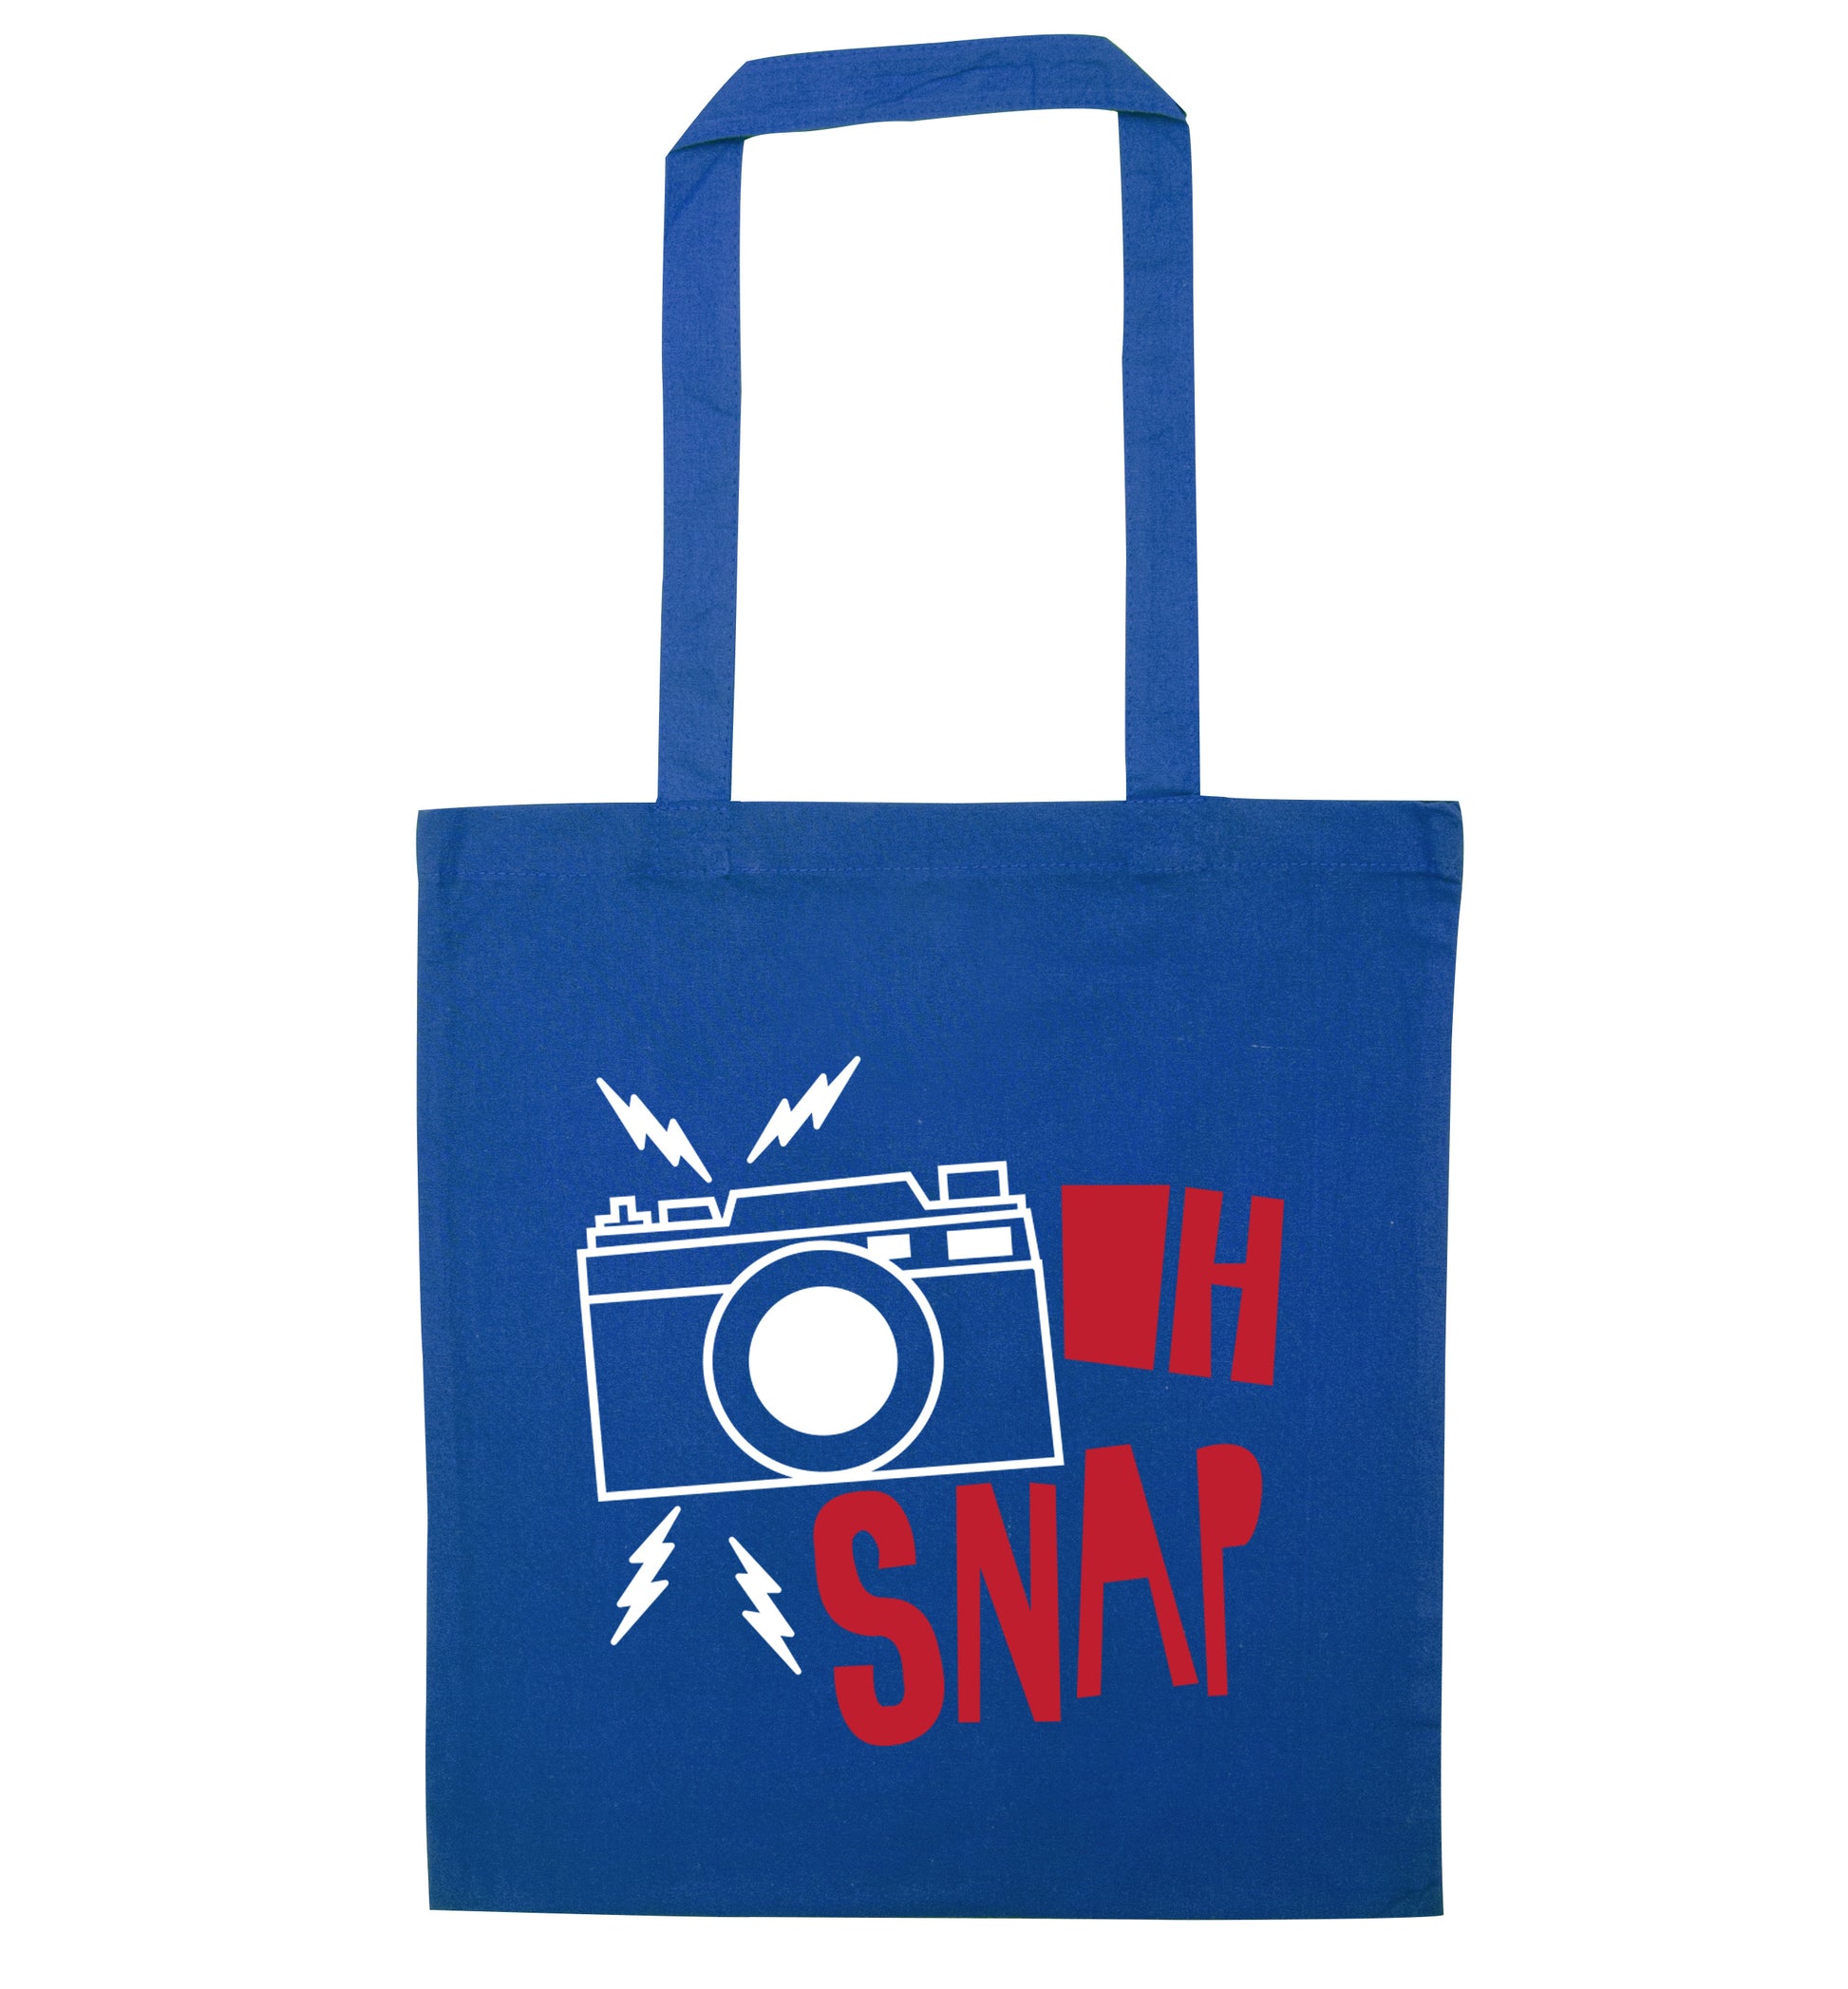 Oh Snap blue tote bag